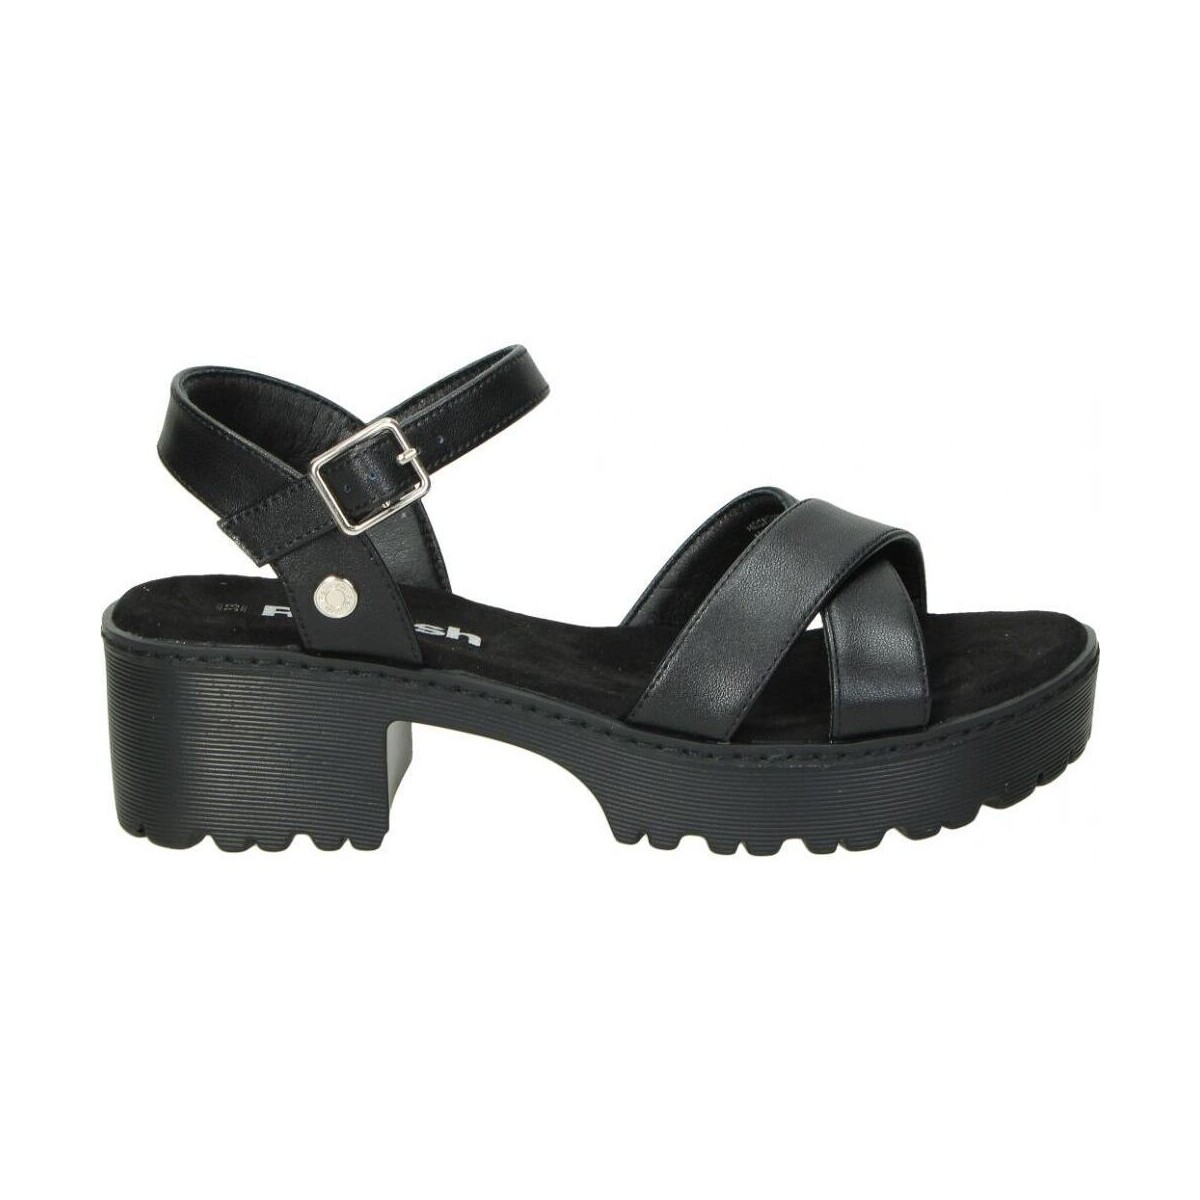 Schoenen Dames Sandalen / Open schoenen Refresh 79281 Zwart